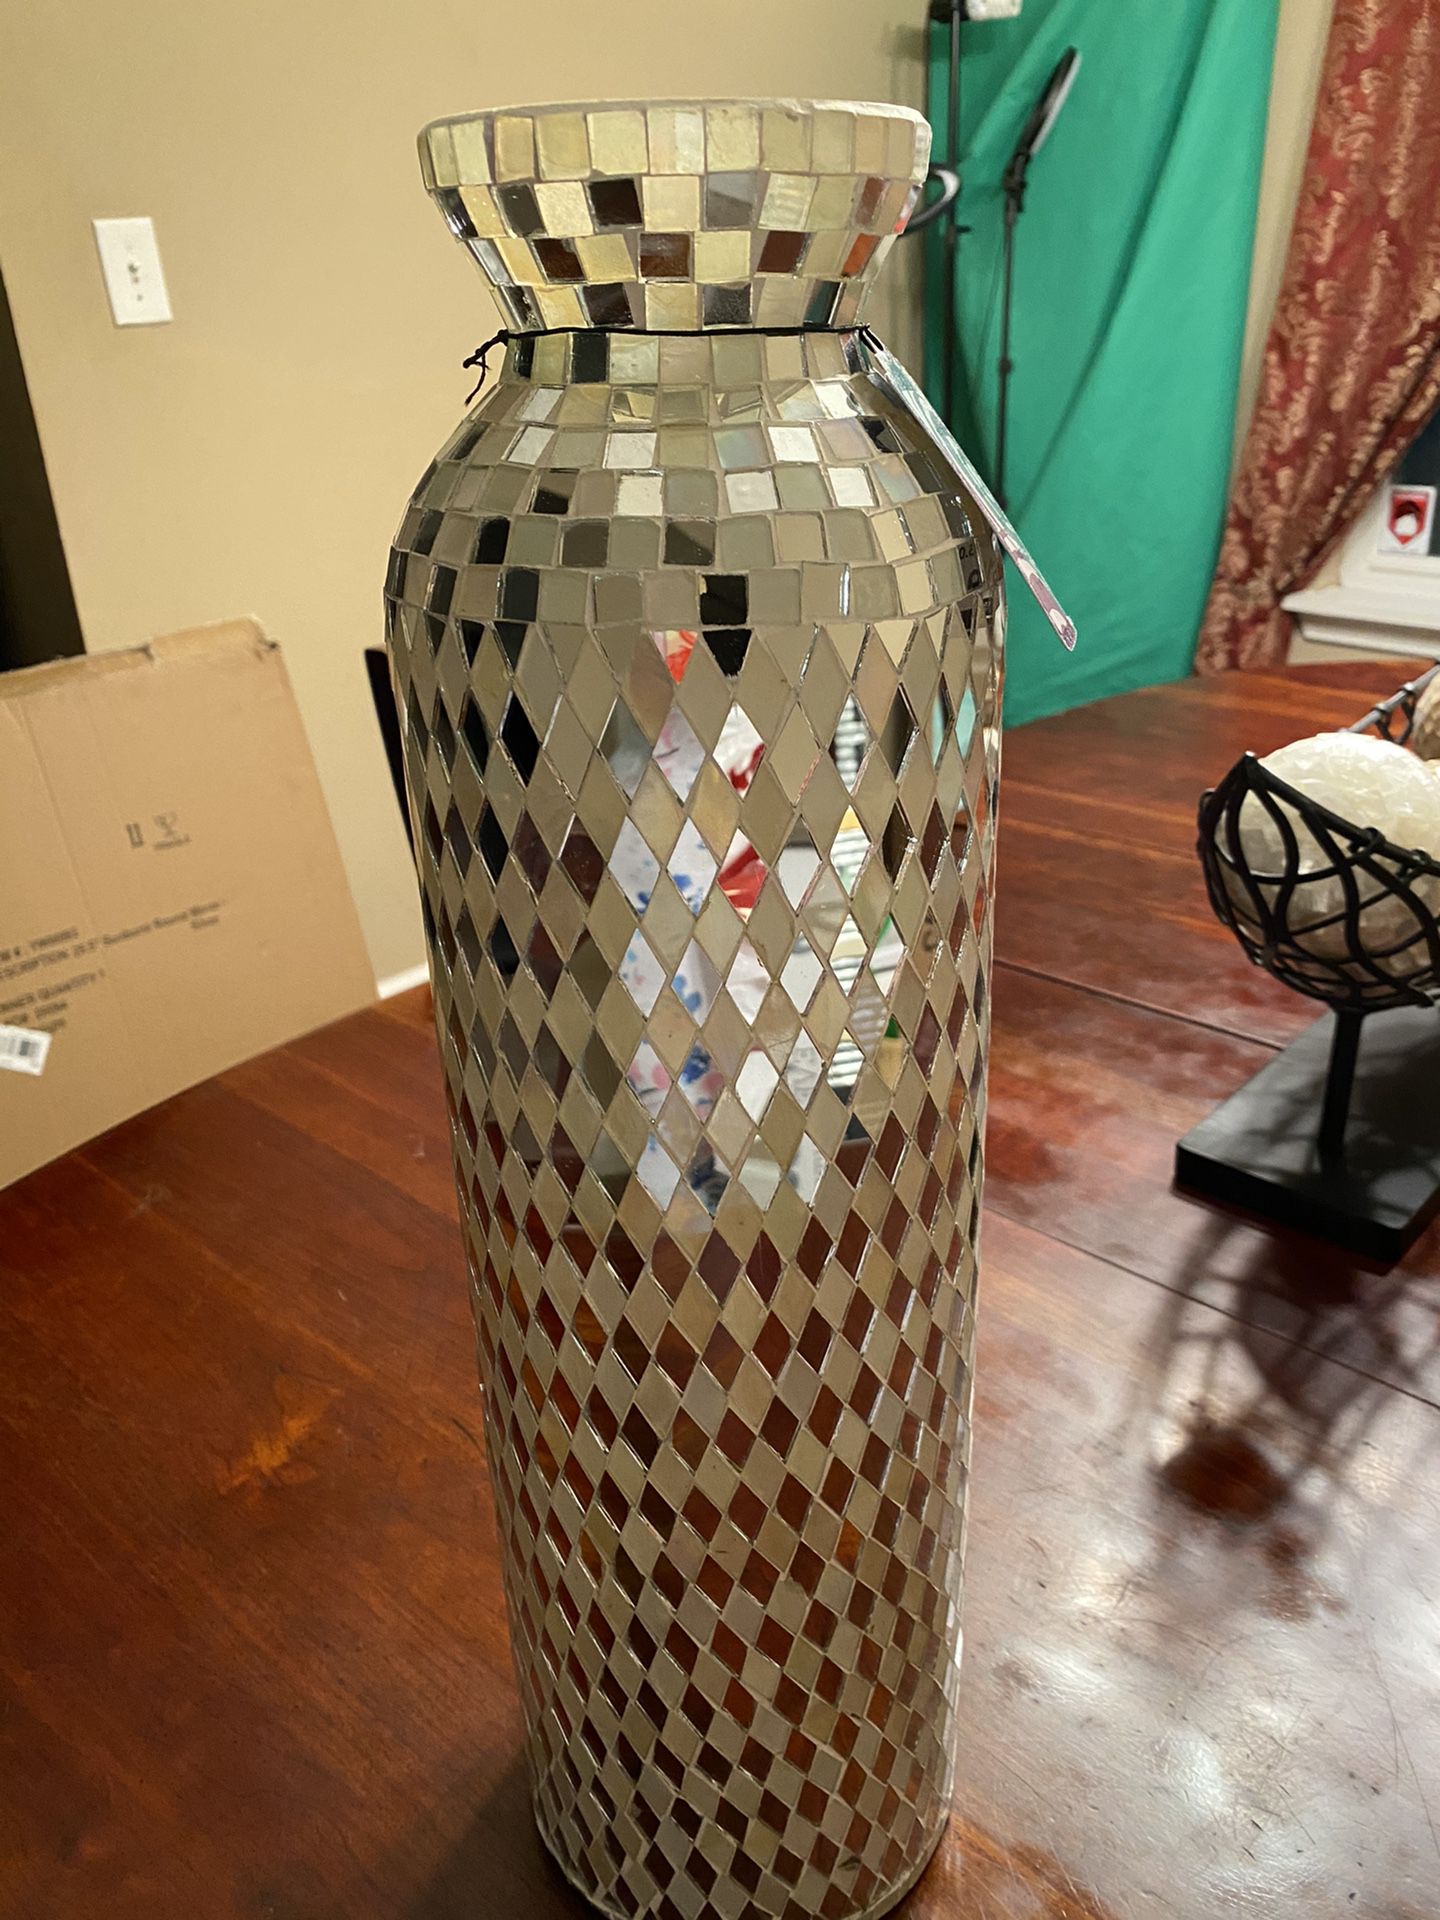 Tall glass vase